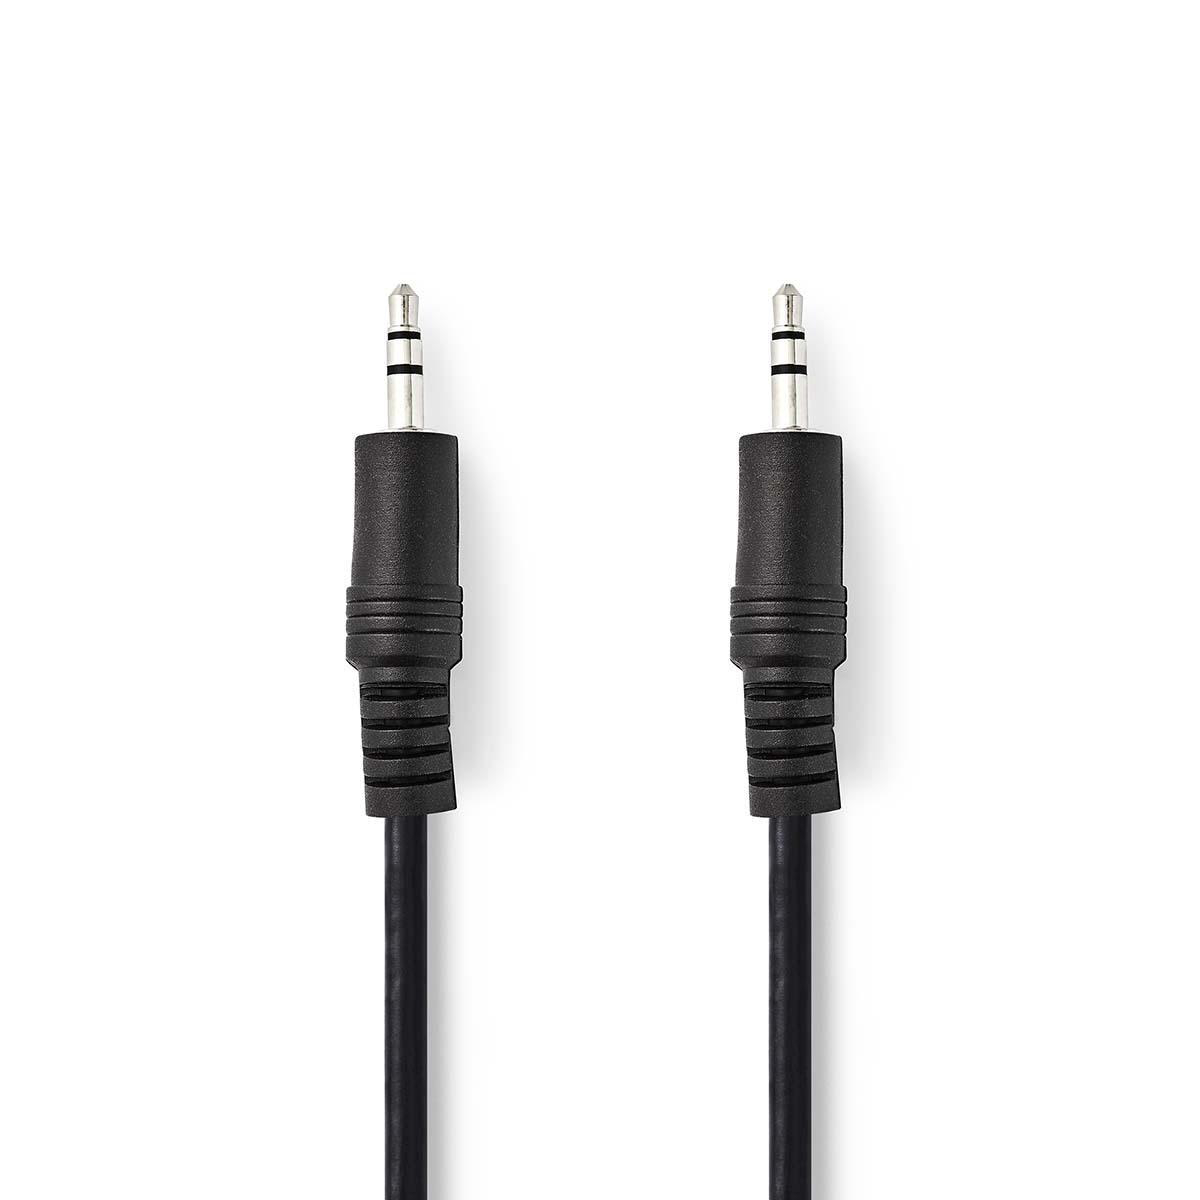 Nedis Stereo Audio kabel, 3.5 mm Male - 3.5 mm Male, 2m, zwart